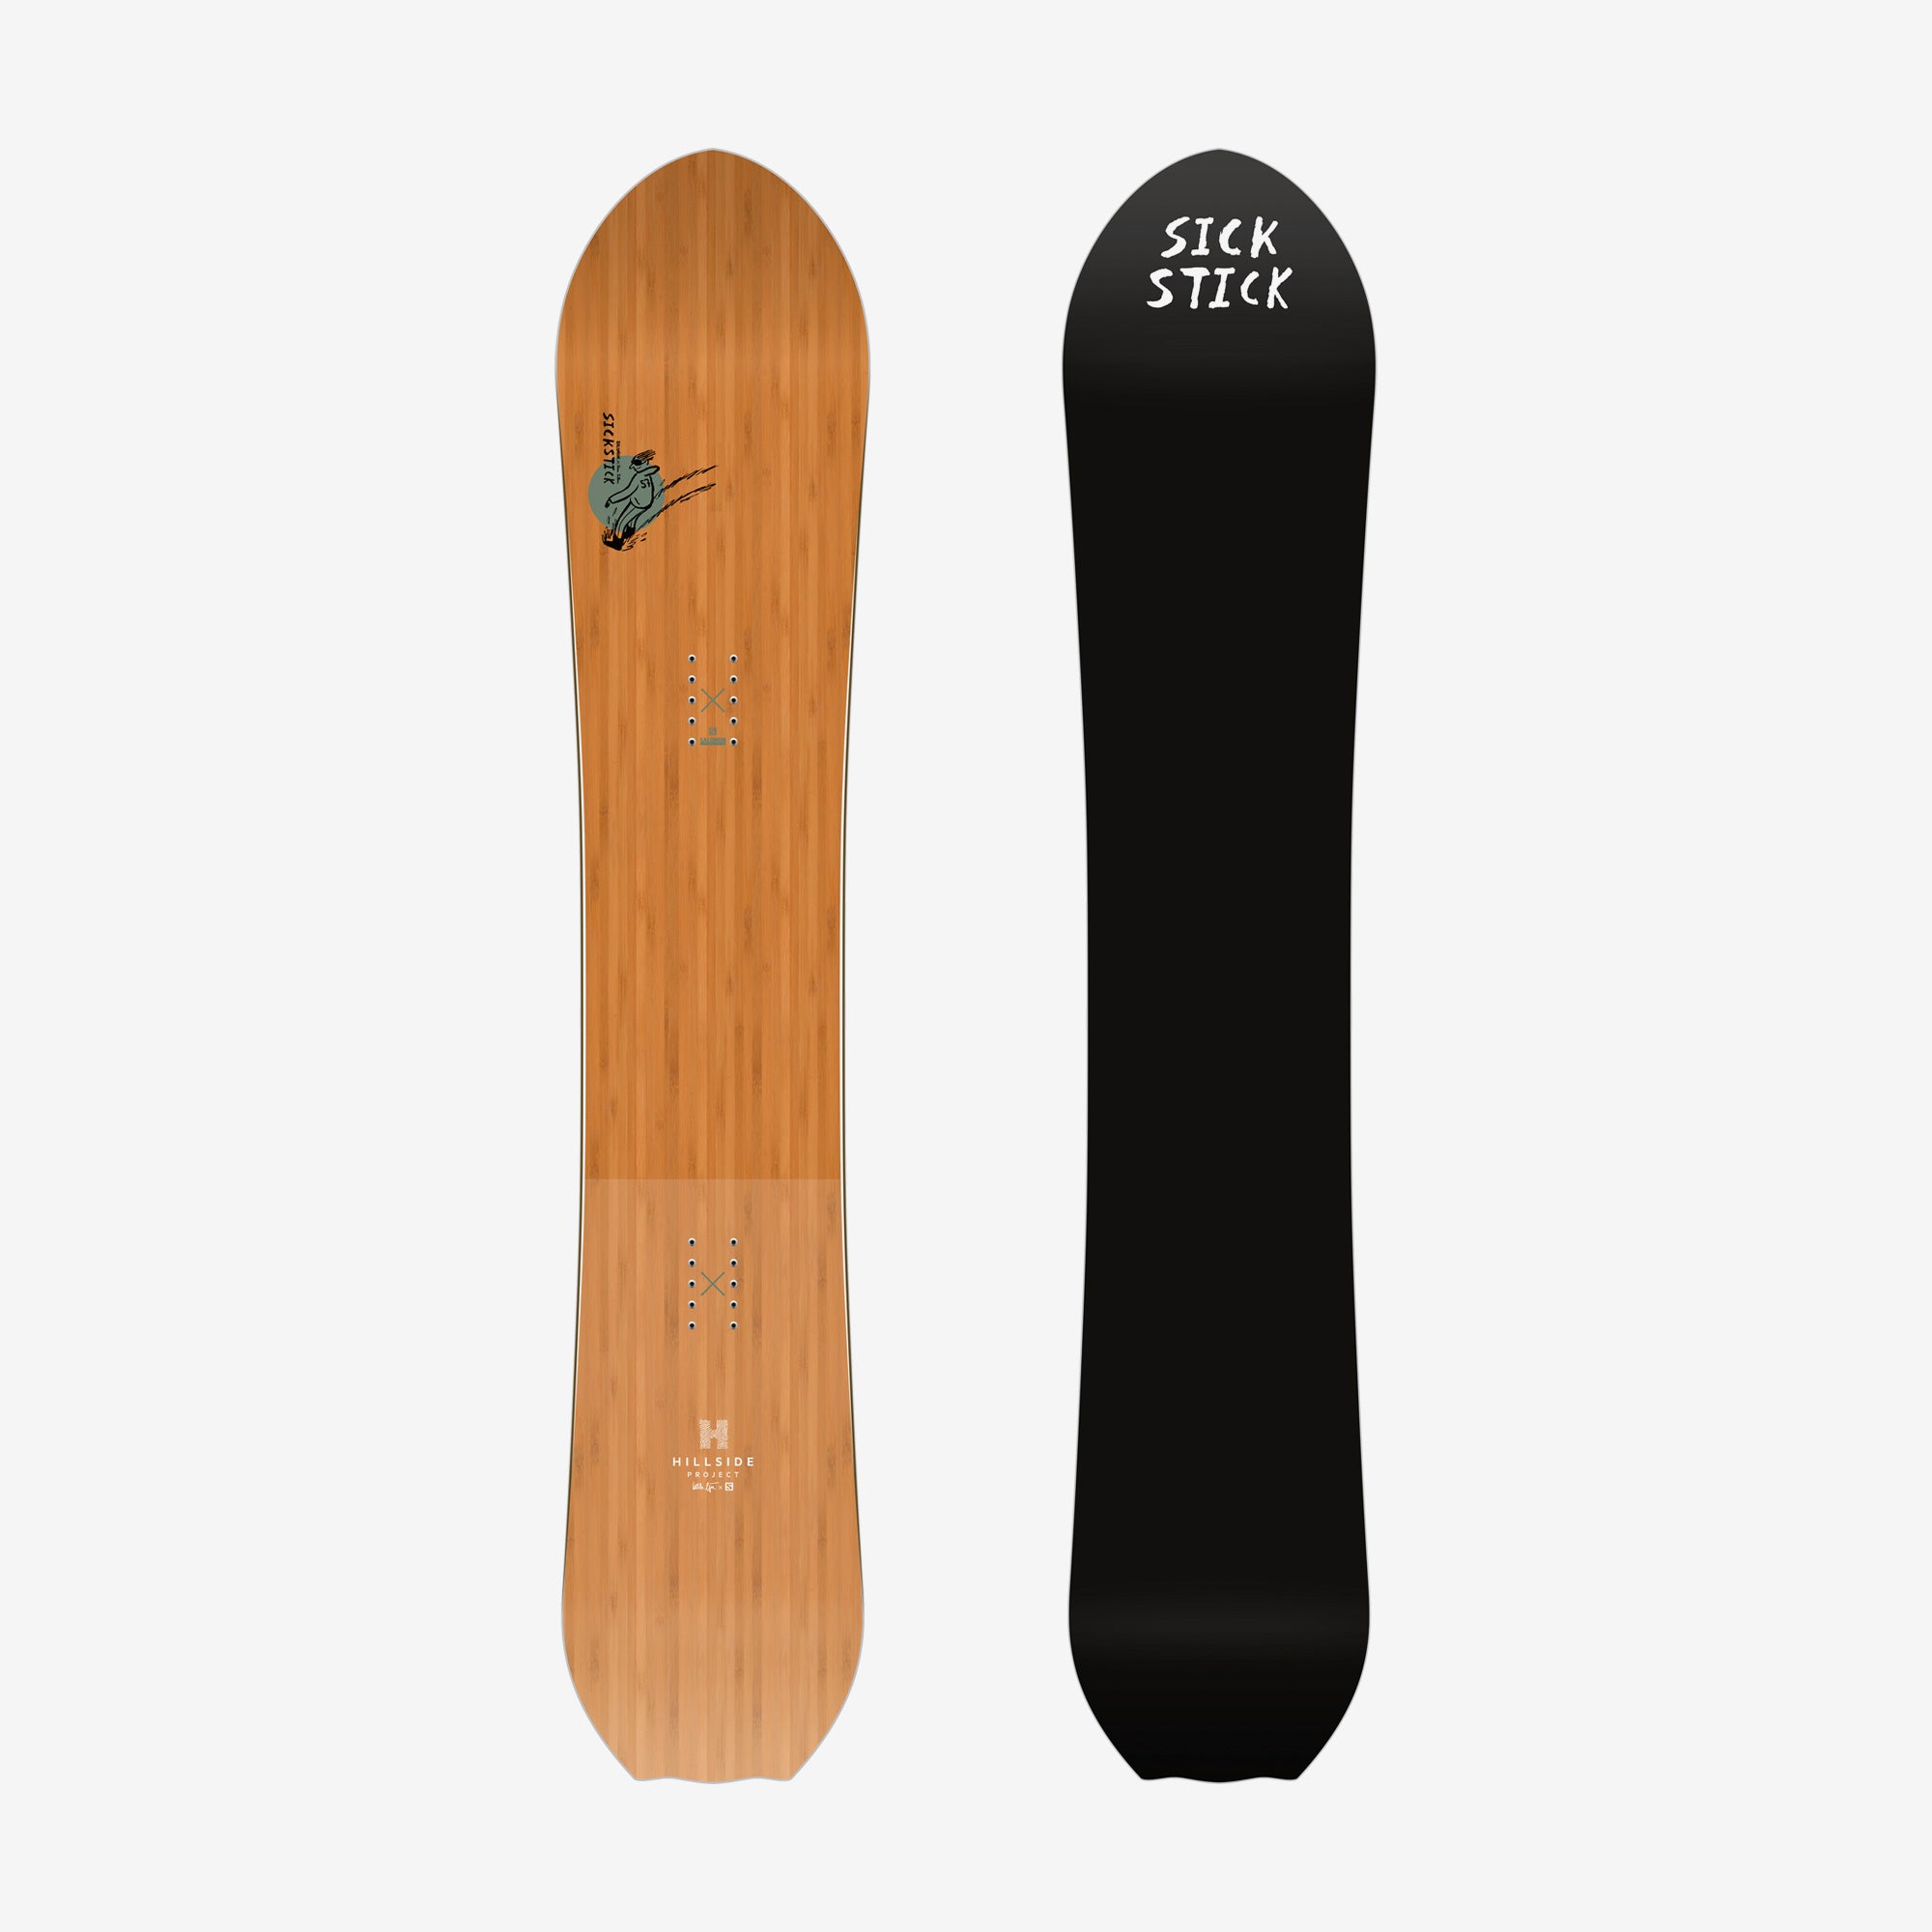 Salomon Sickstick - Men's Freeride Snowboard - 2021